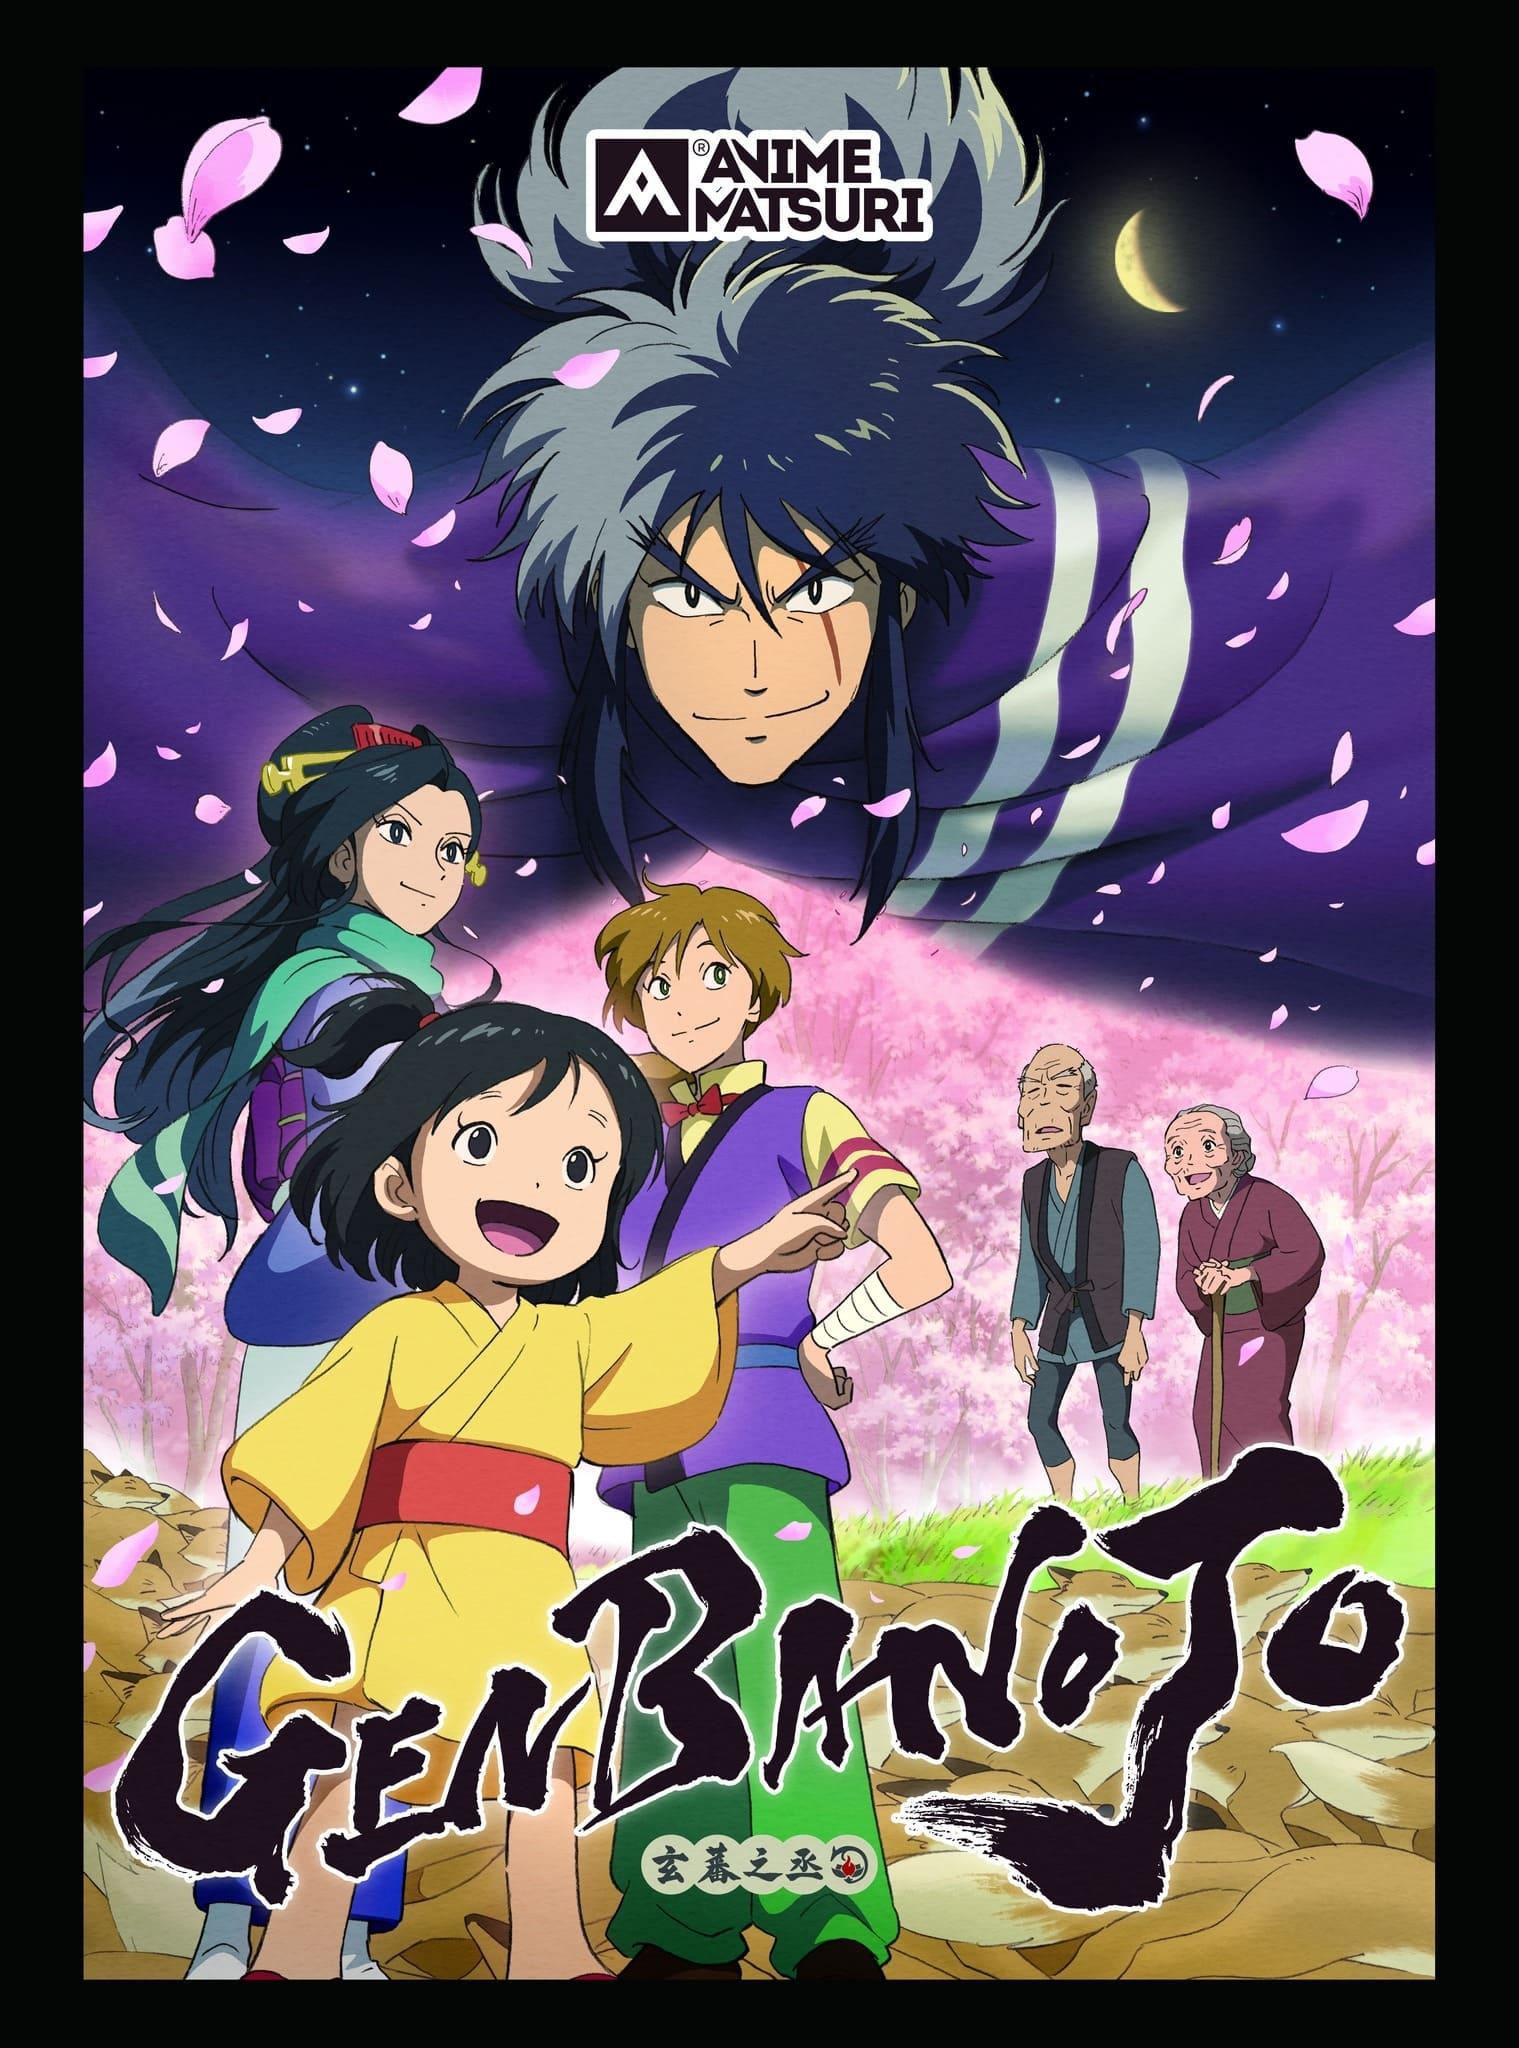 Genbanojō poster